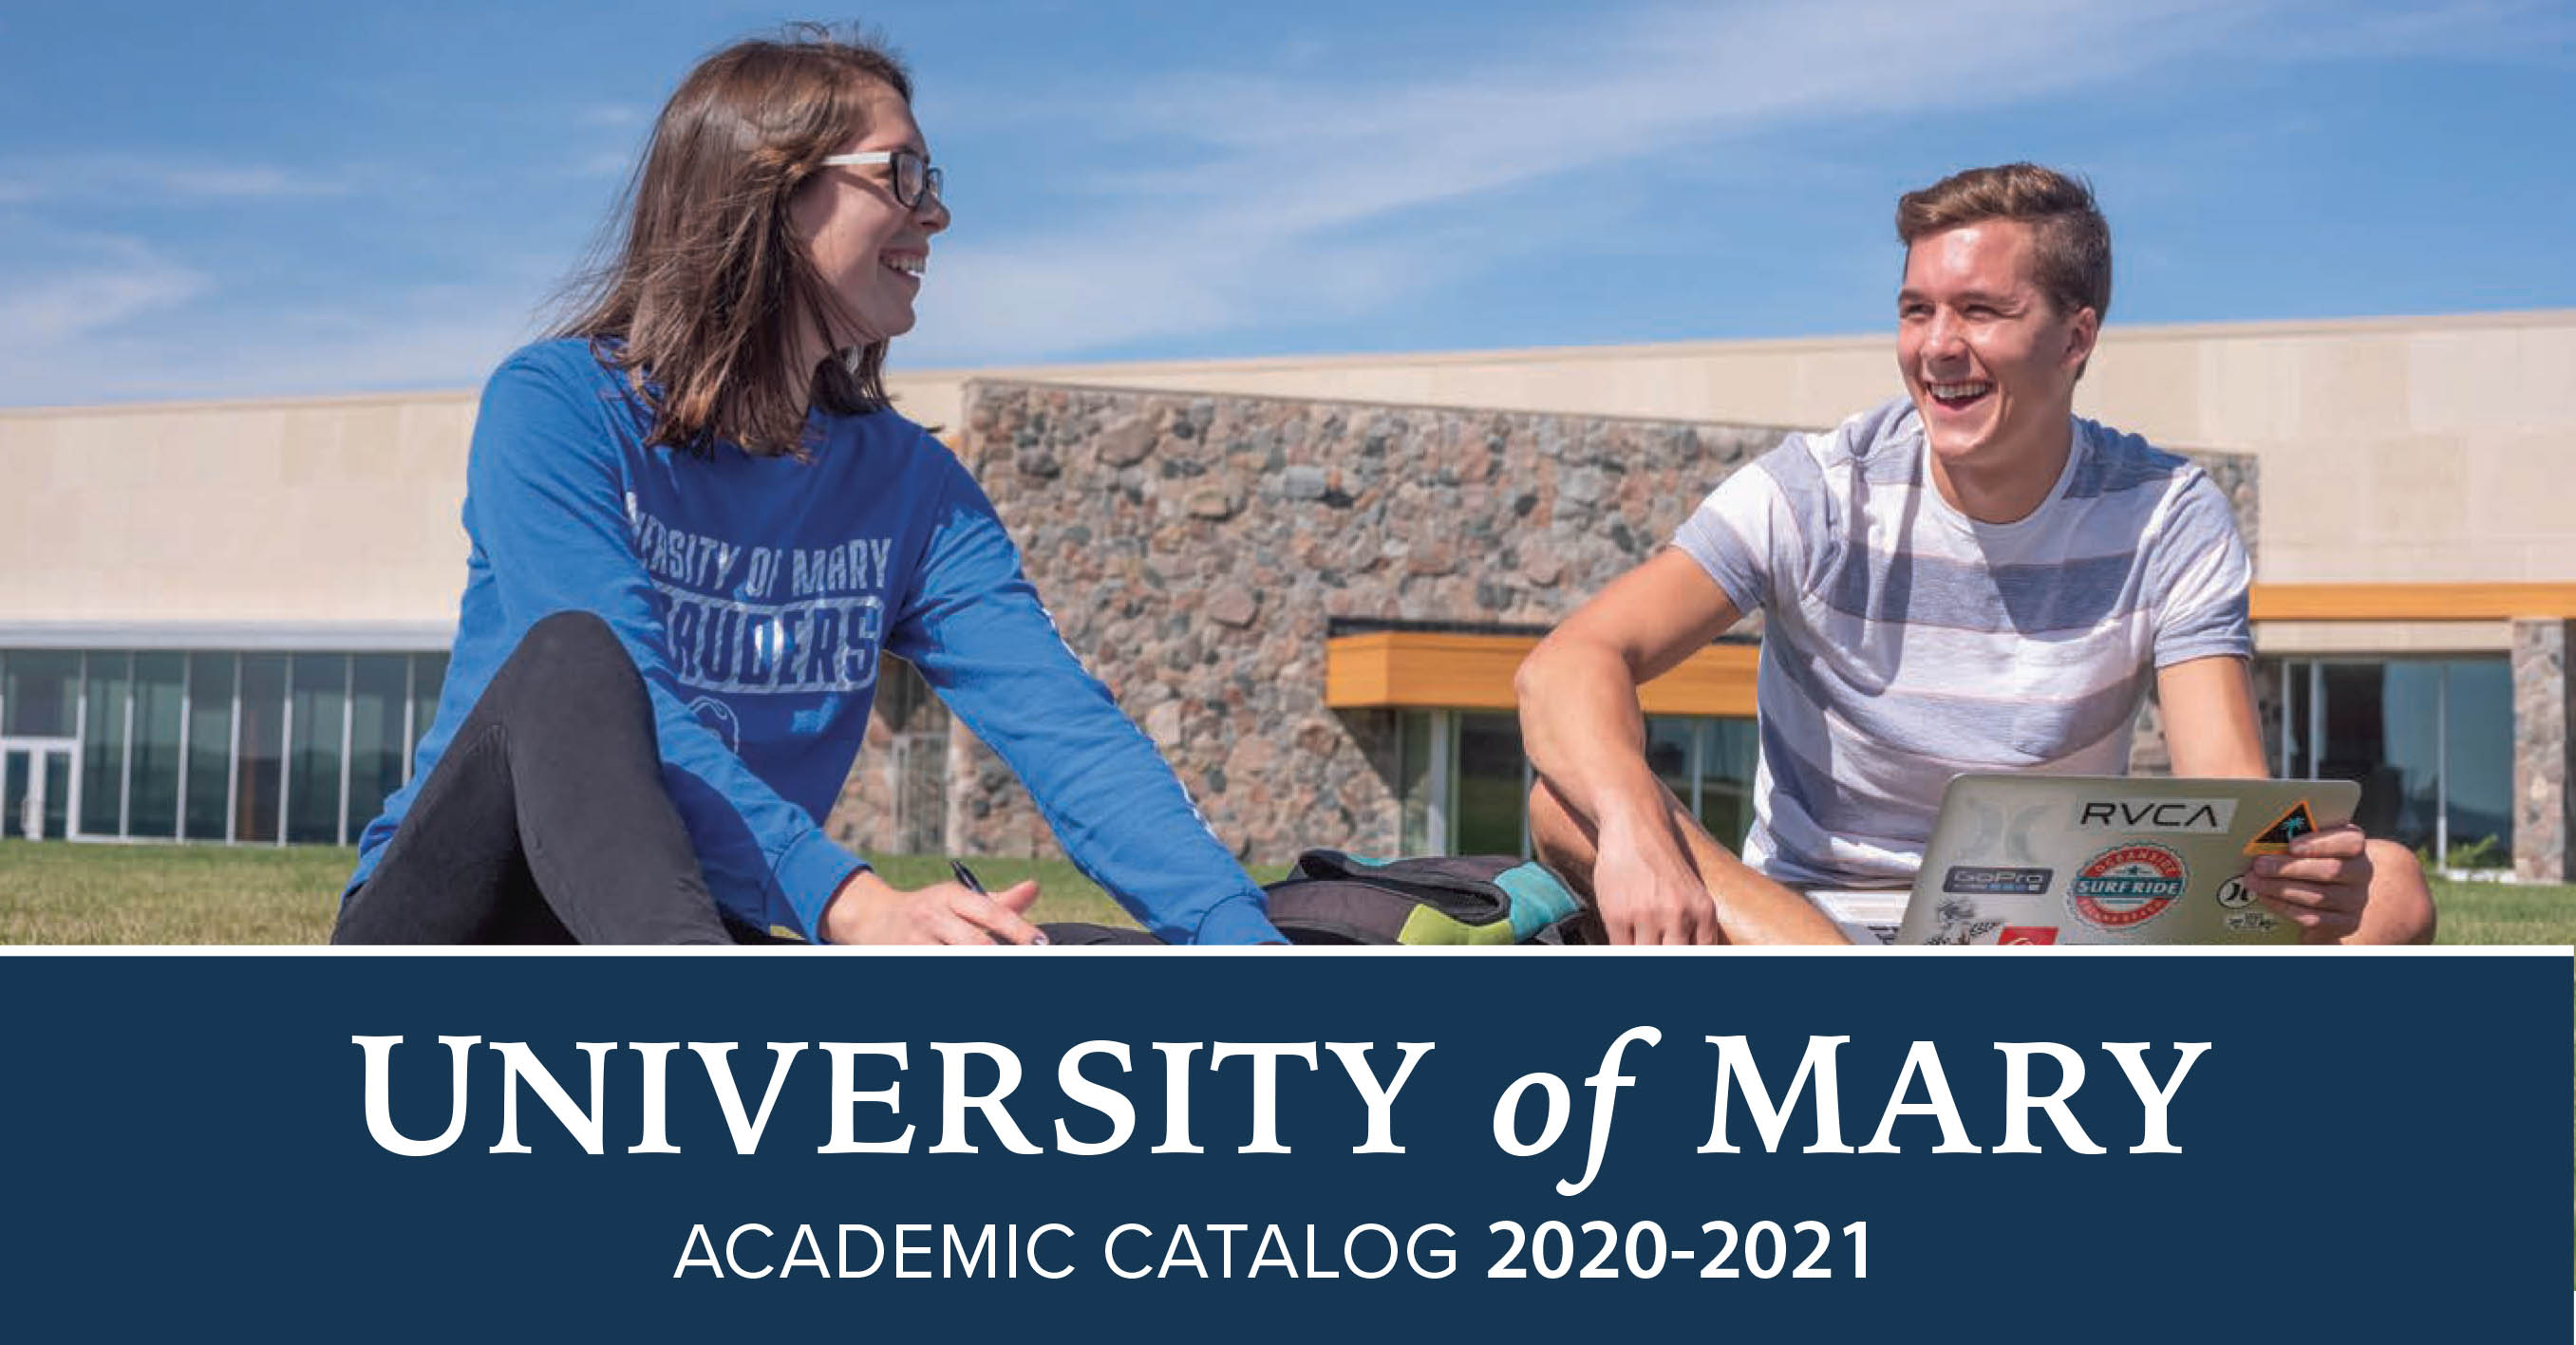 University of Mary Academic Catalog 2020-2021